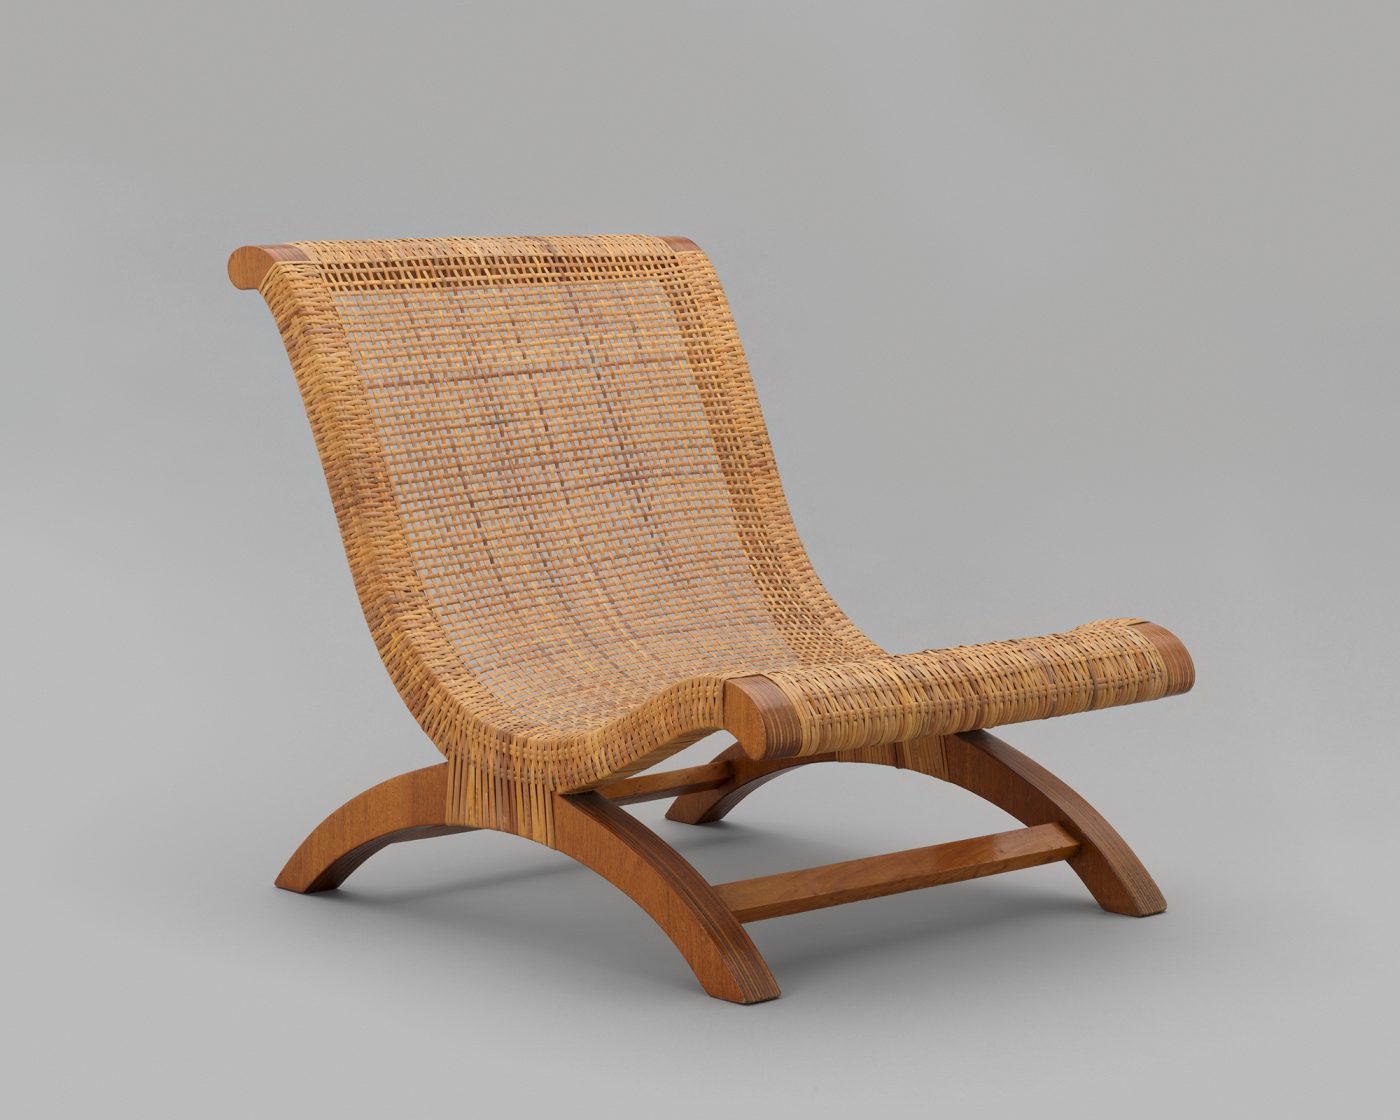 A 1957 Butaque chair by designer Clara Porset